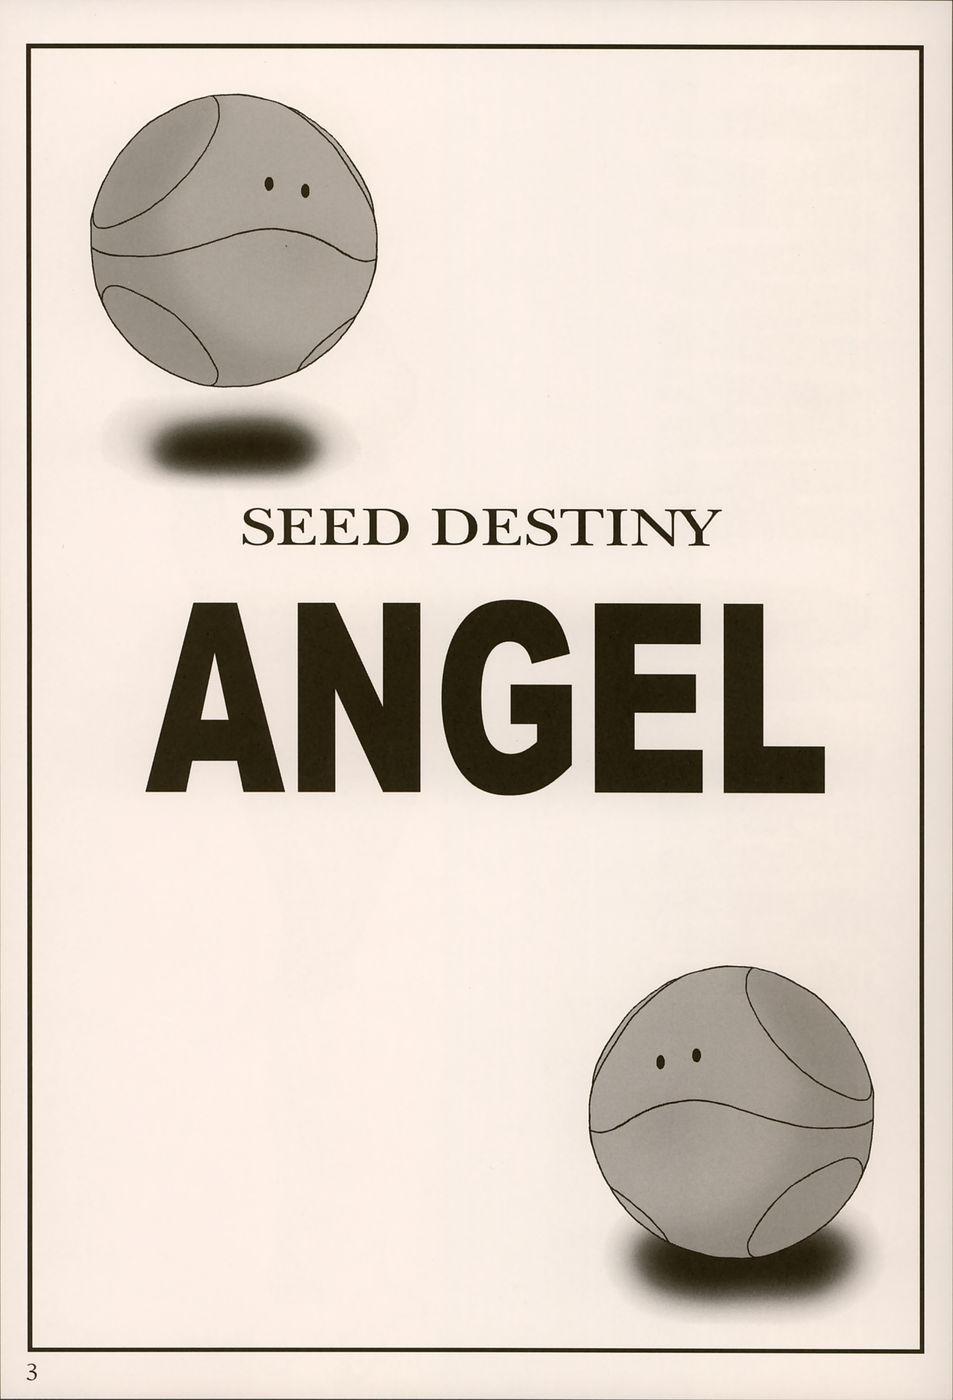 SEED DESTINY ANGEL 1 1